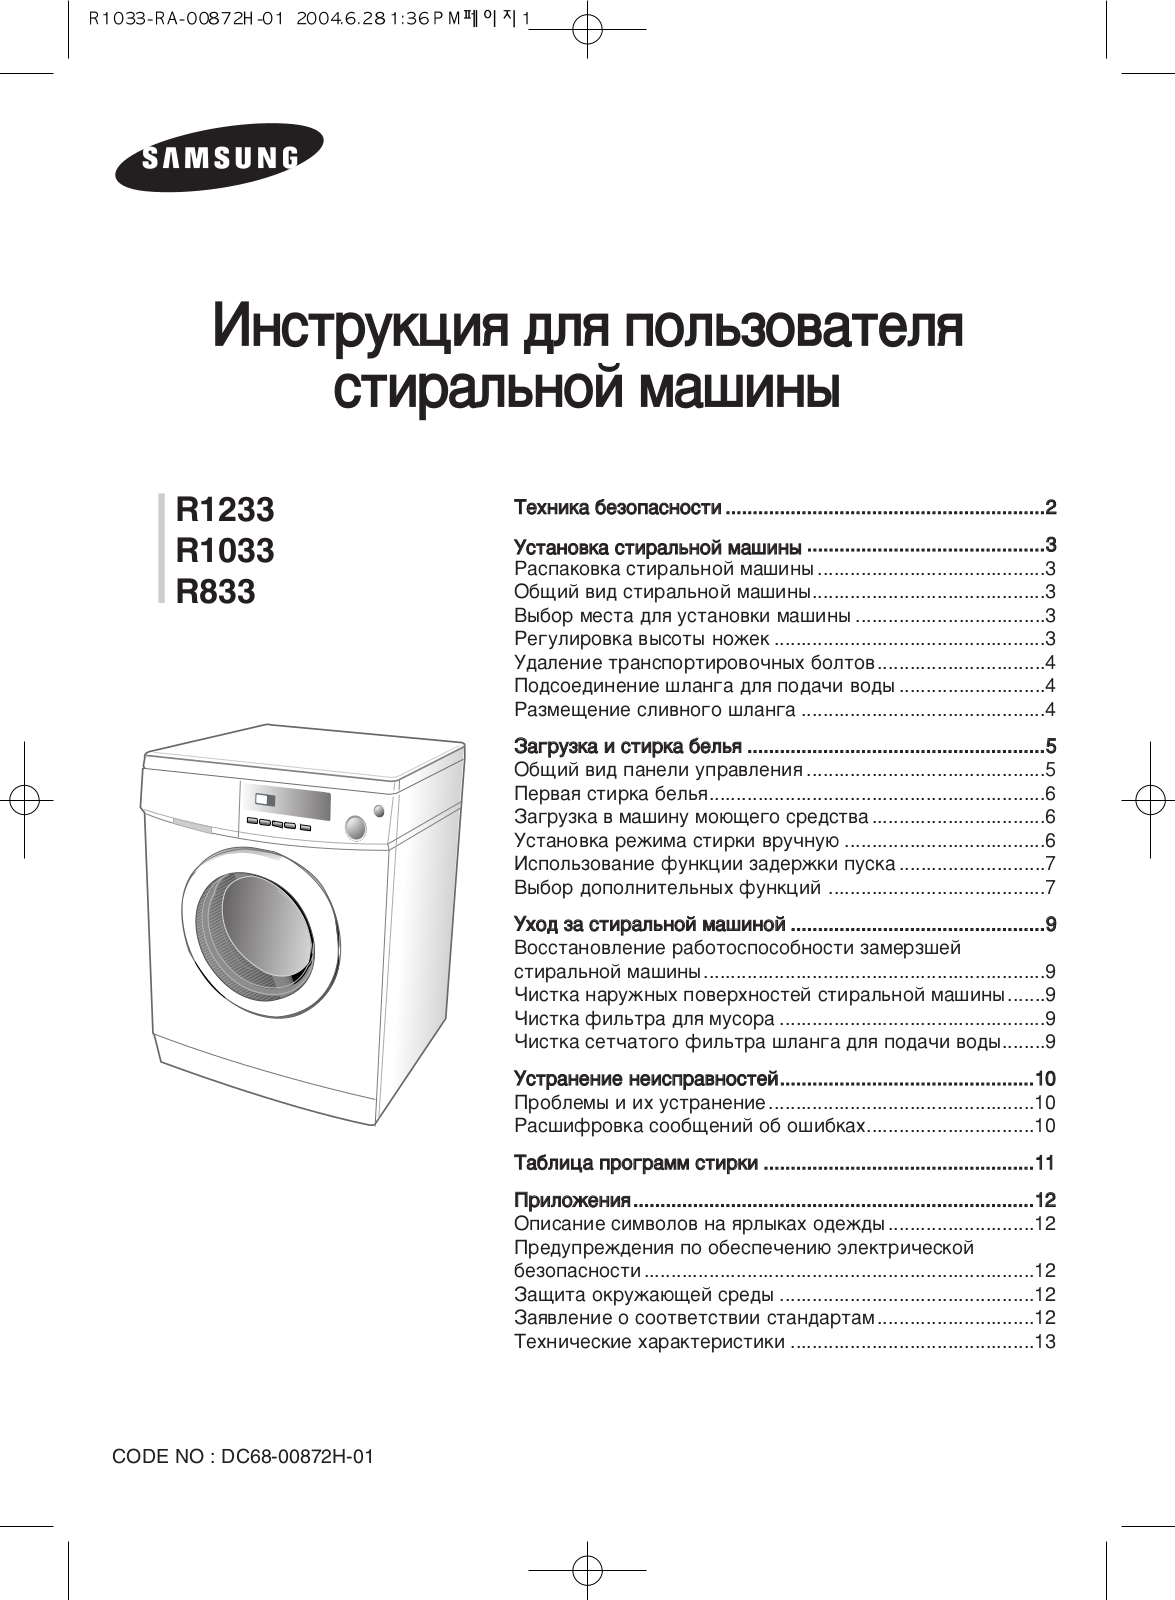 Samsung R833, R1233, R1033 User Manual